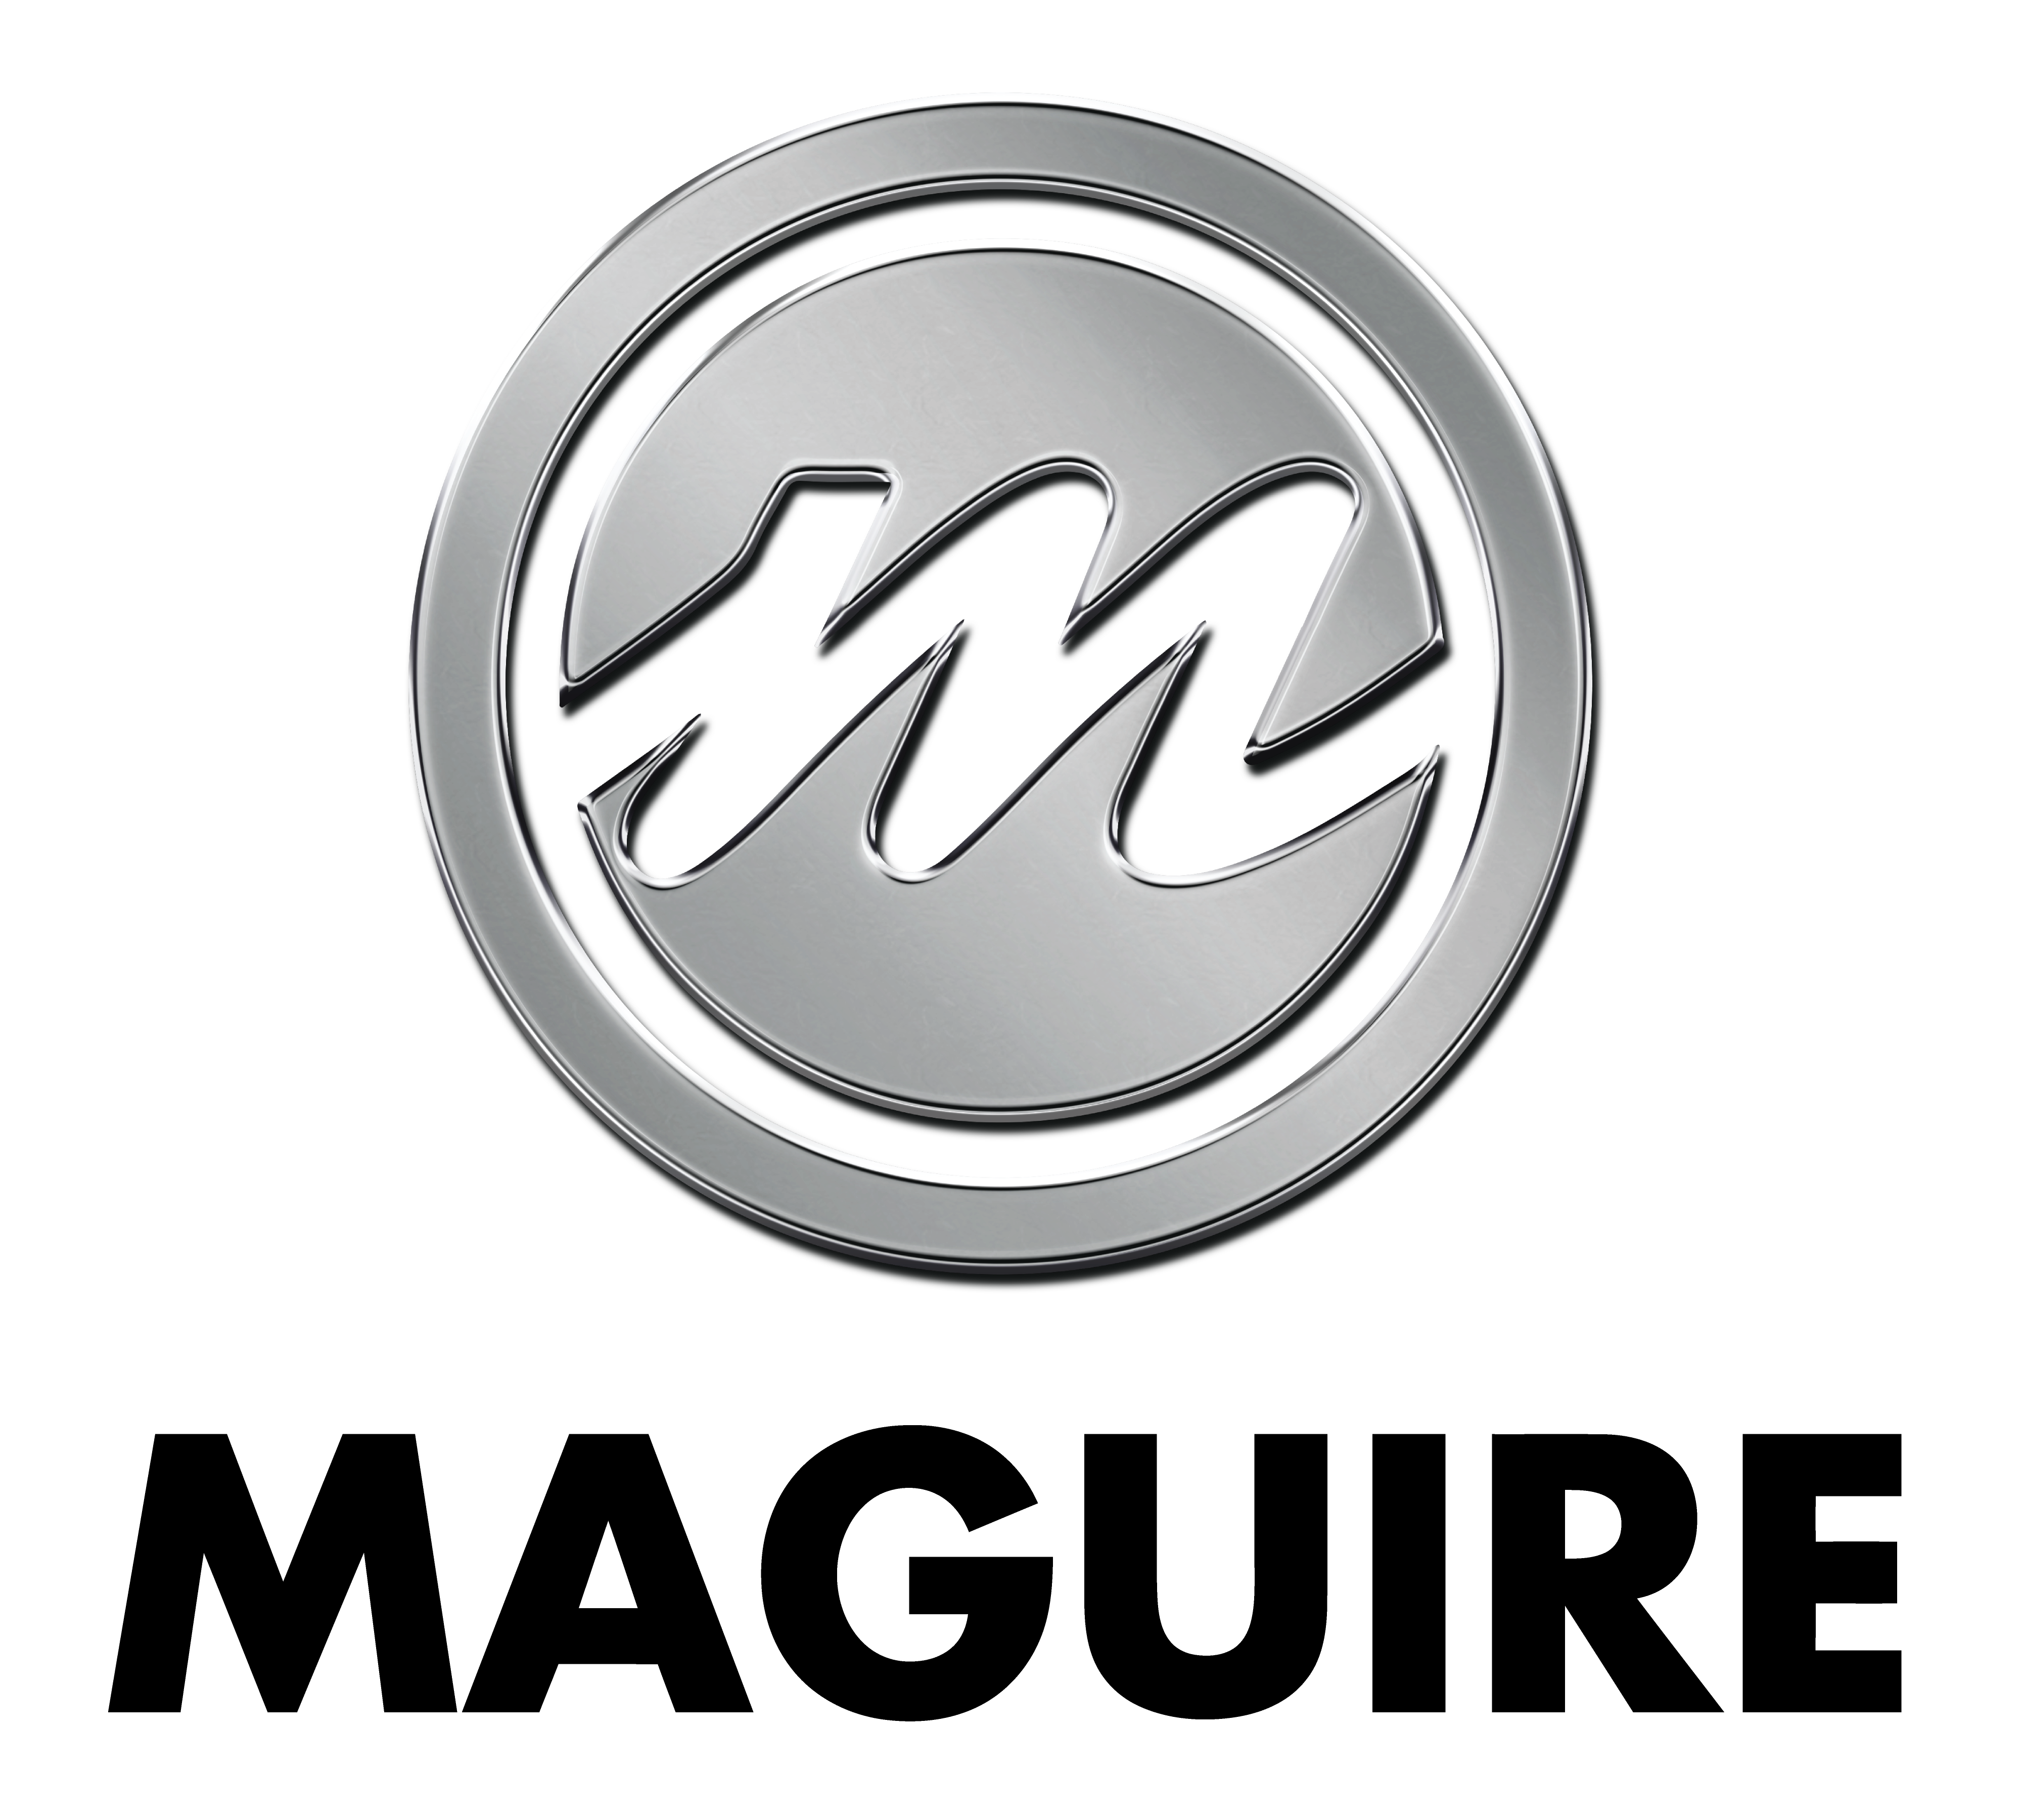 Maguire logo